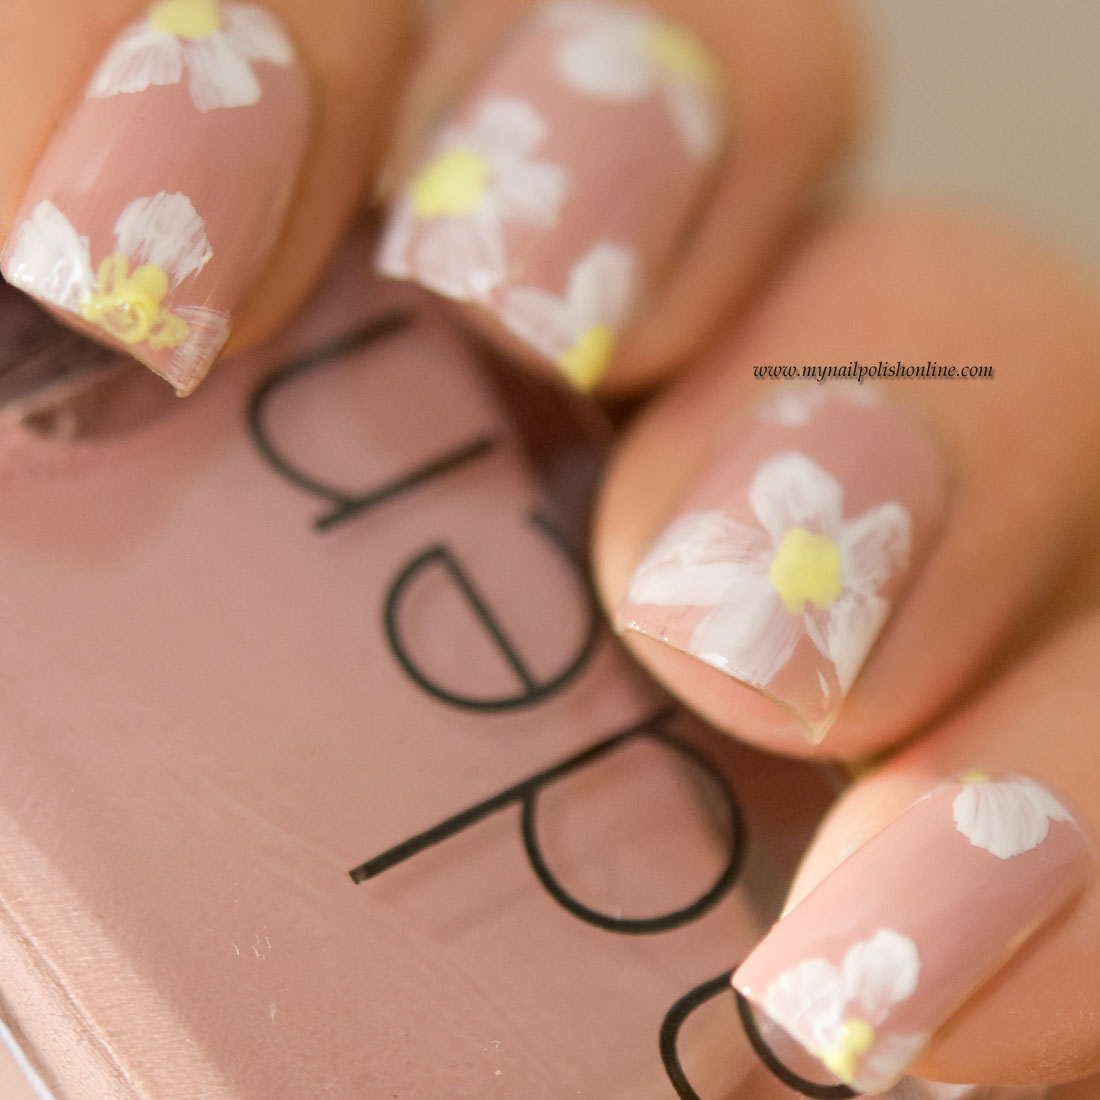 Nail art Sunday - Floral manicure